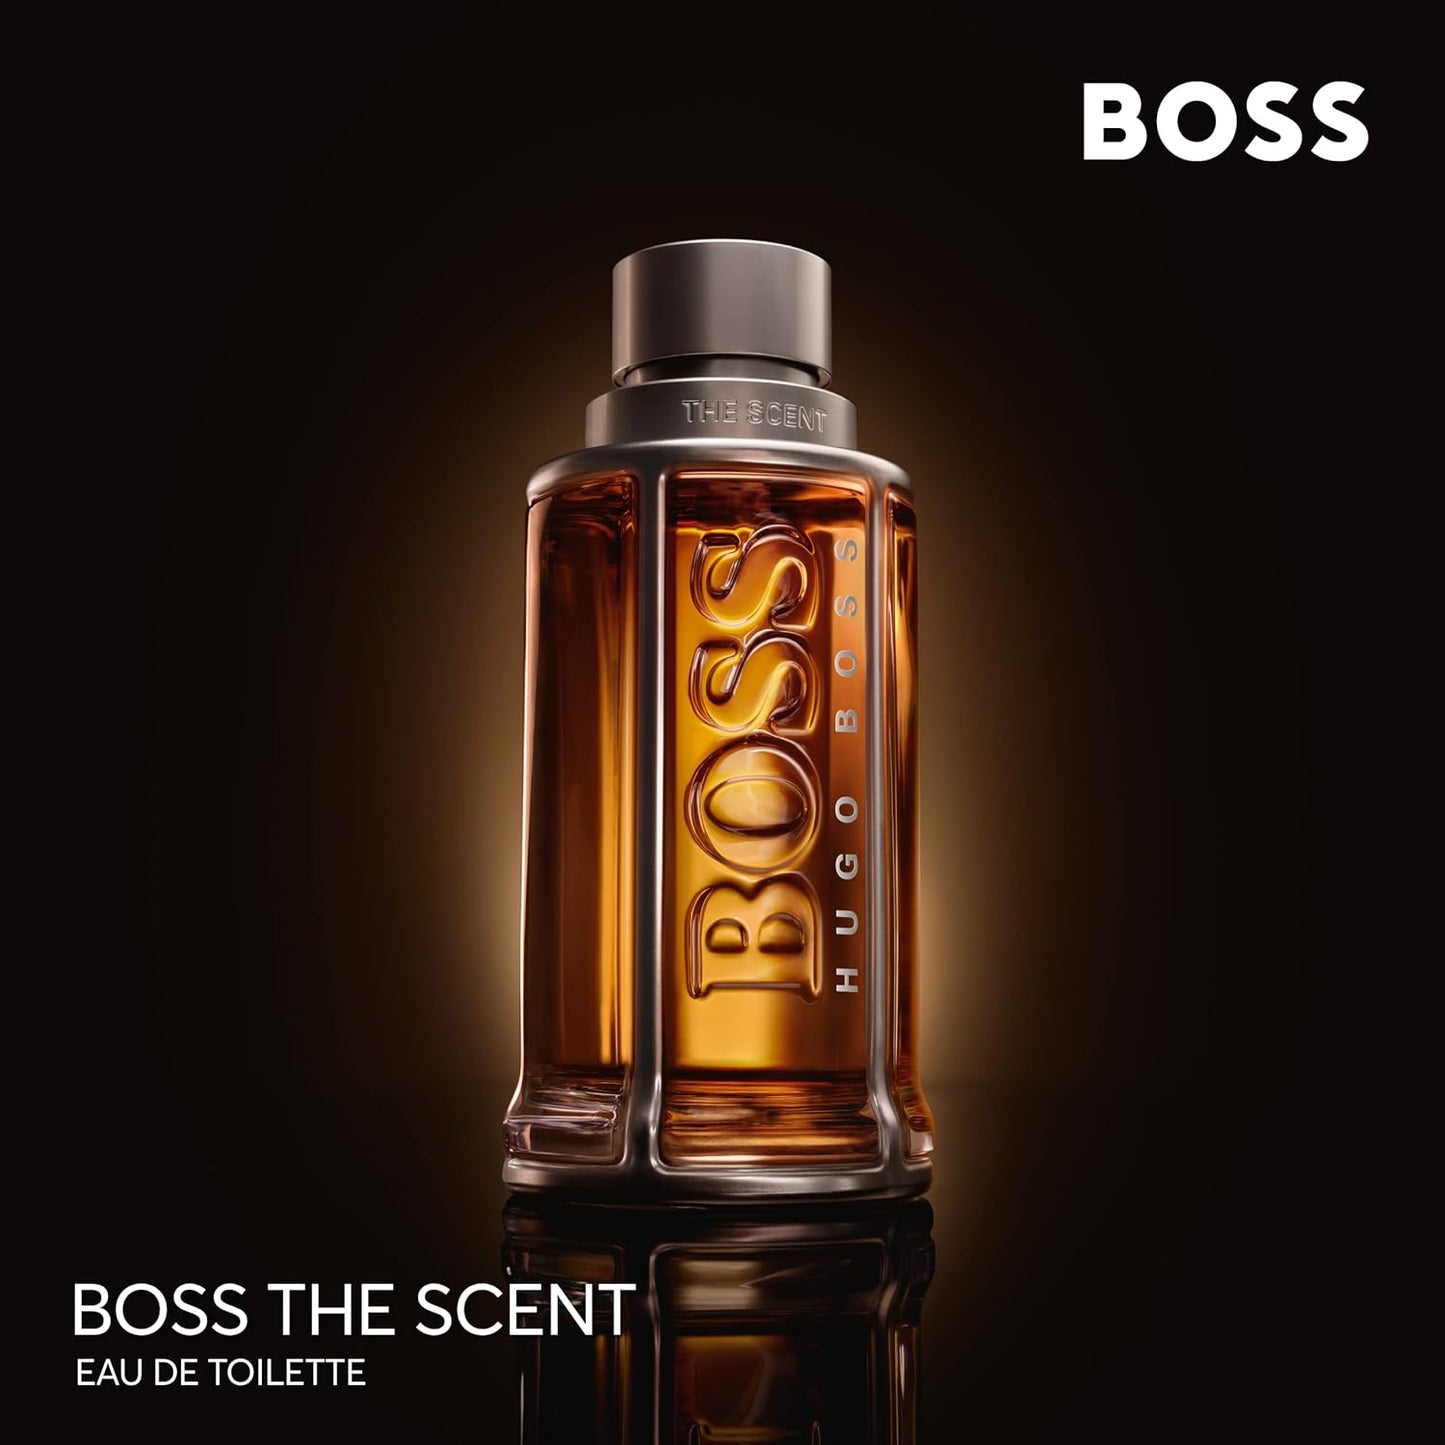 Hugo Boss The Scent Eau de Toilette for Men - Notes of Ginger, Maninka Fruit and Leather